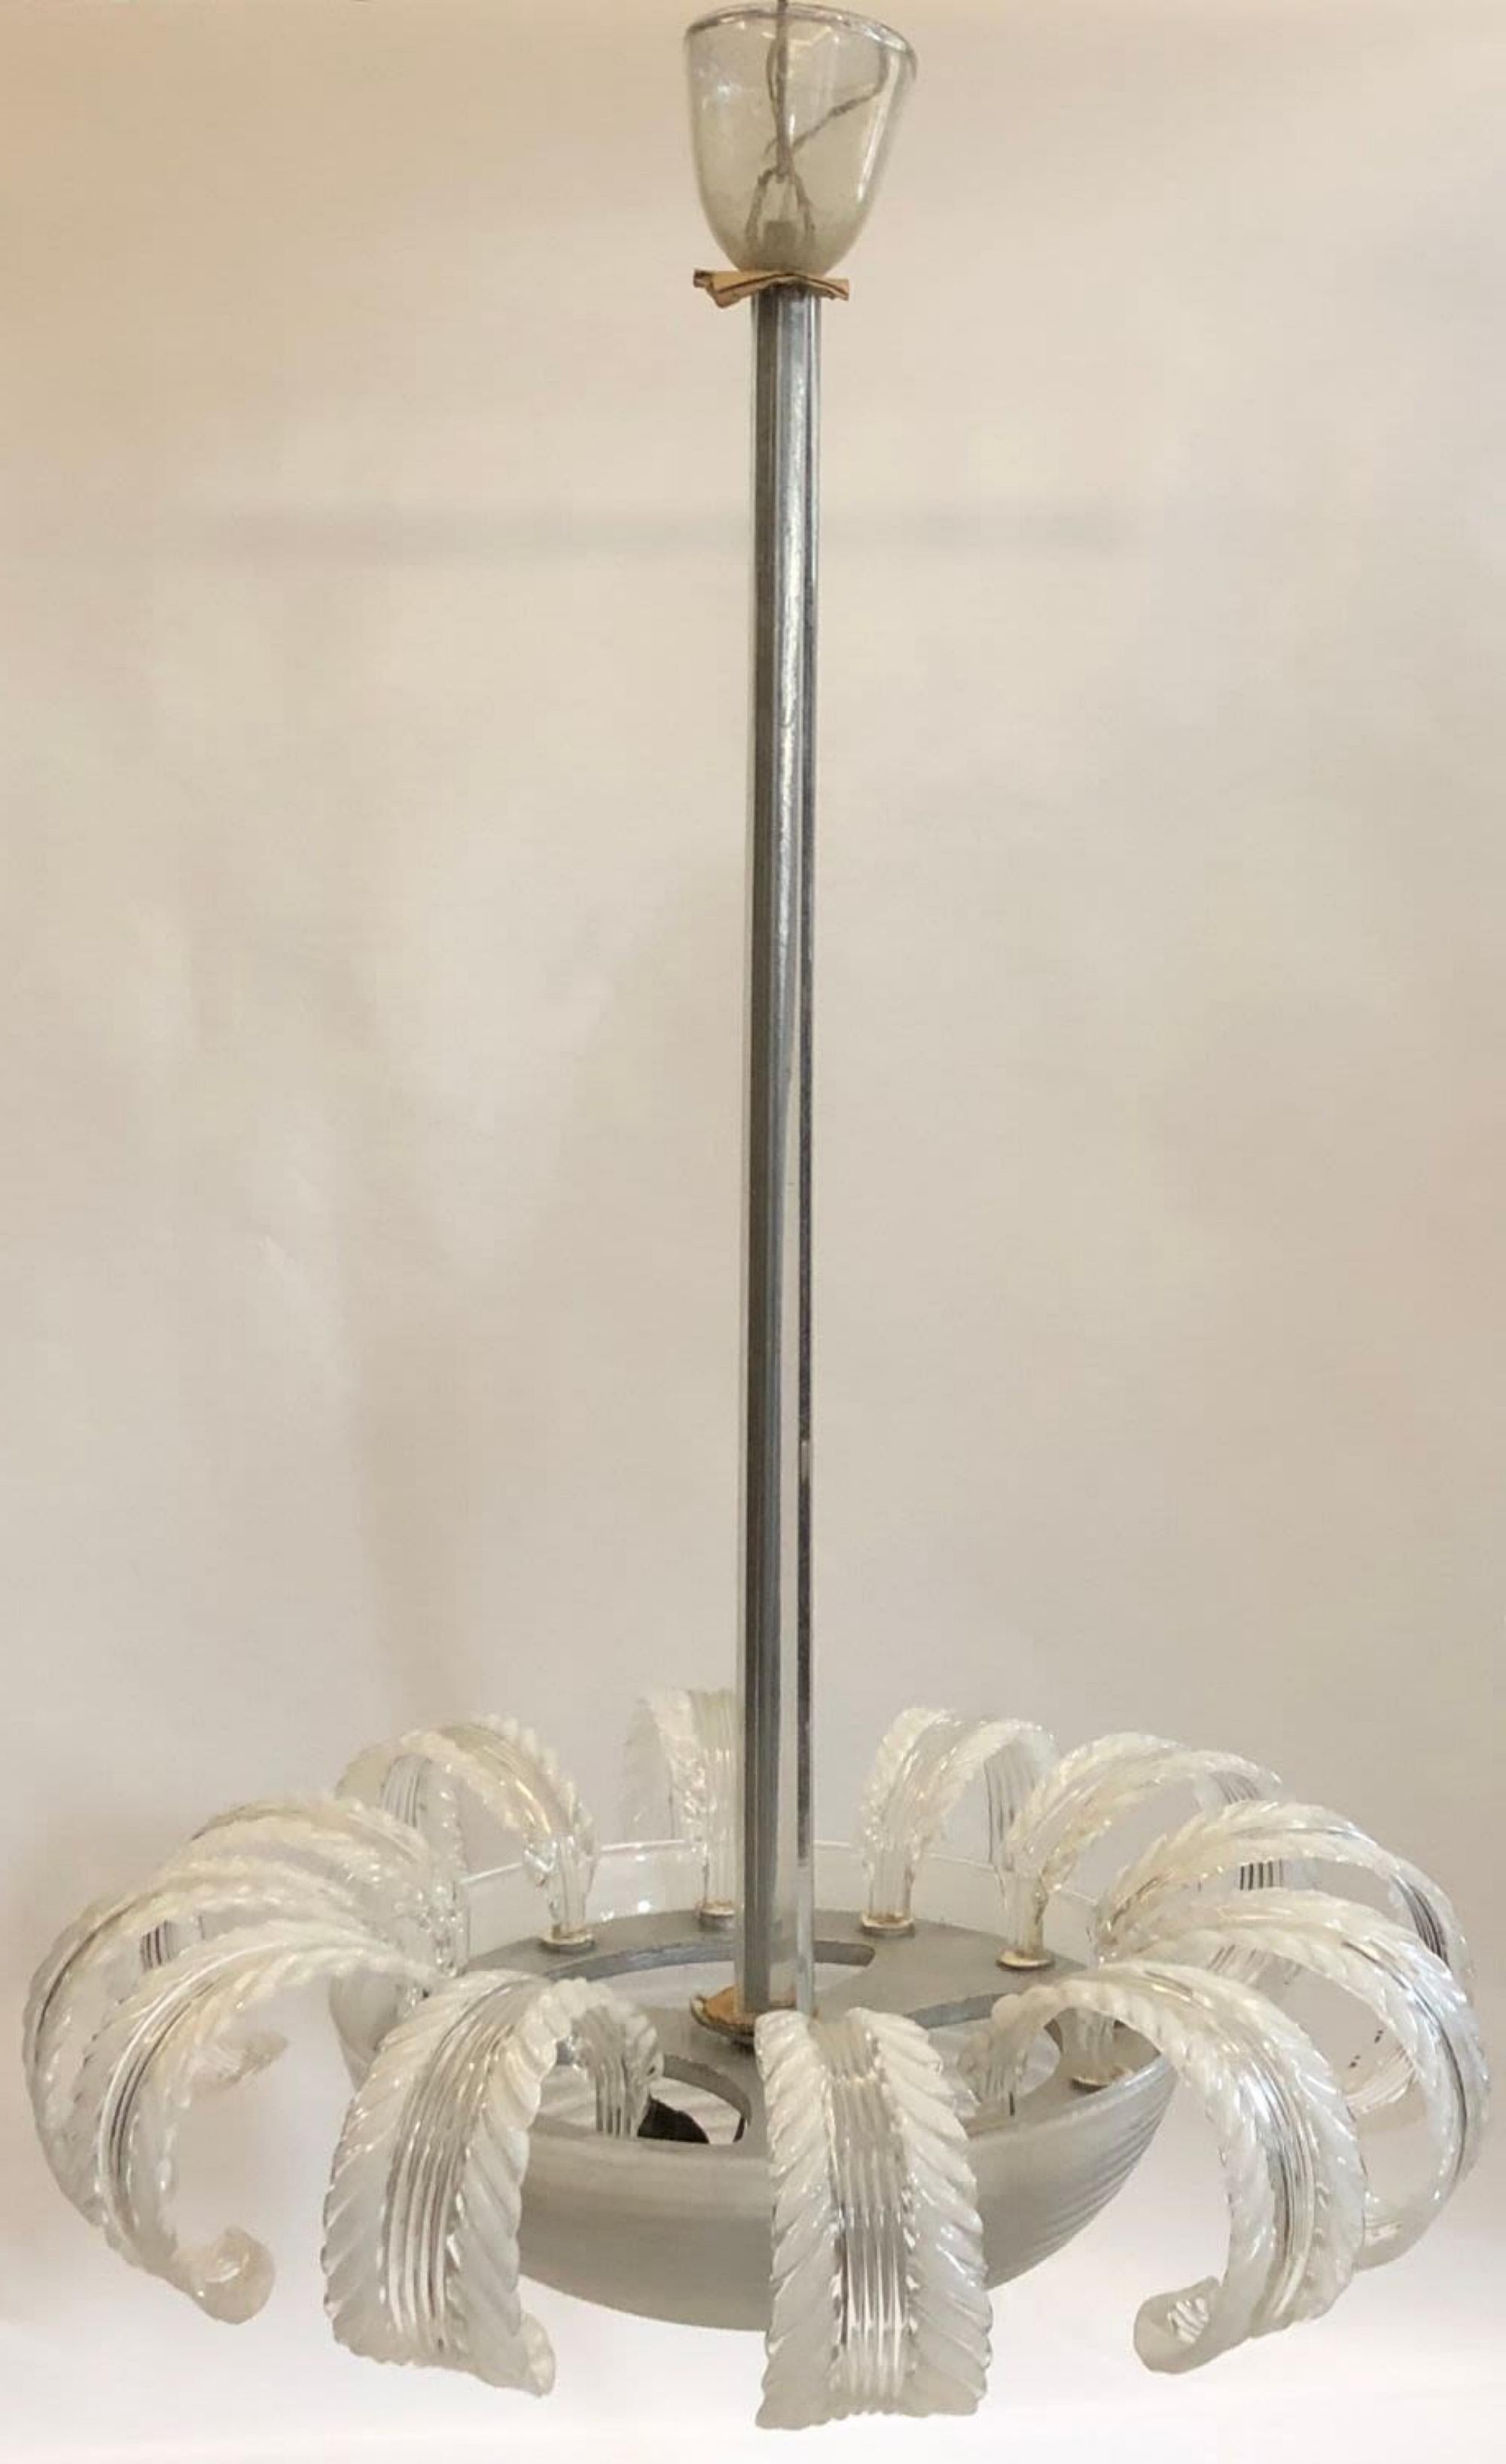 Italian Ercole Barovier Suspension Lamp from the 1950s